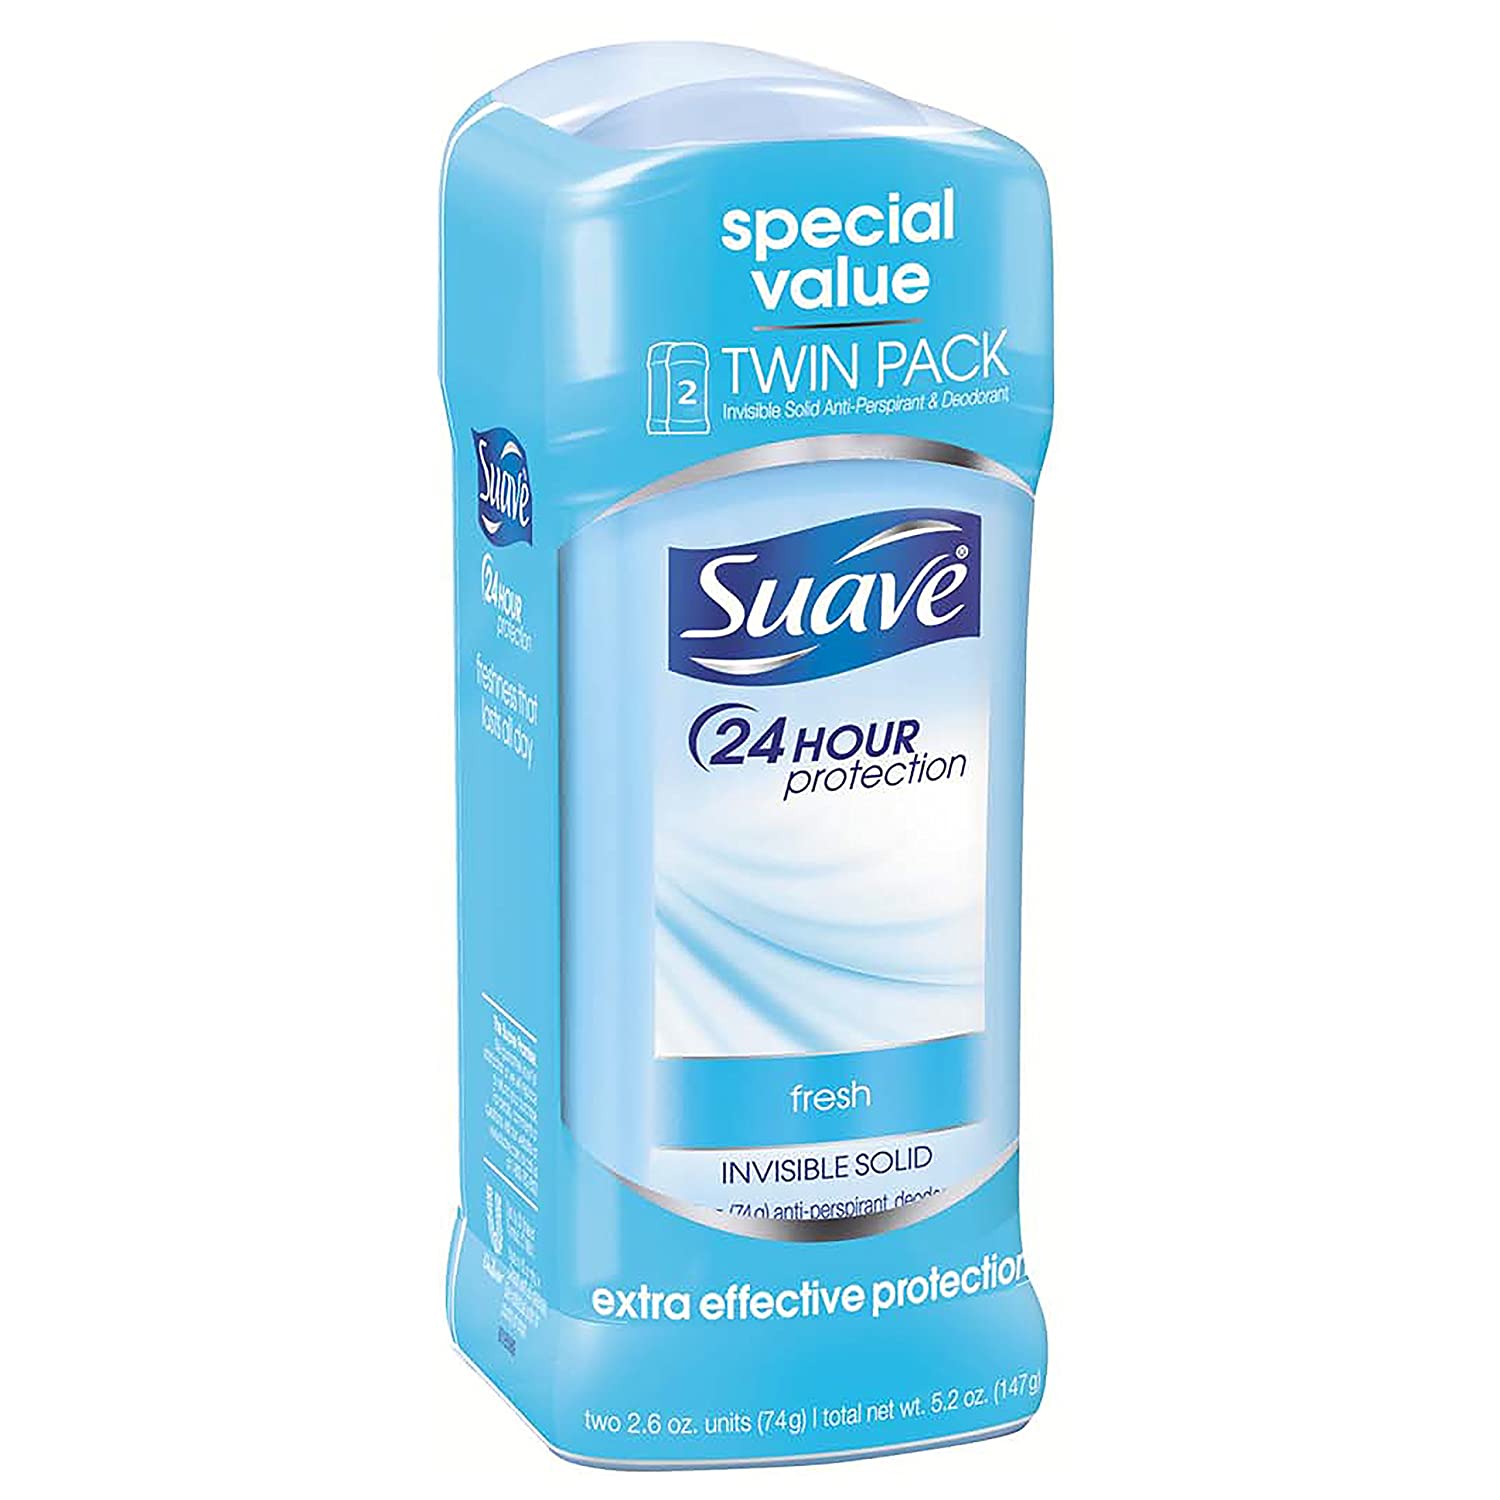 Suave Antiperspirant Deodorant, Shower Fresh 2.6 oz, Twin Pack